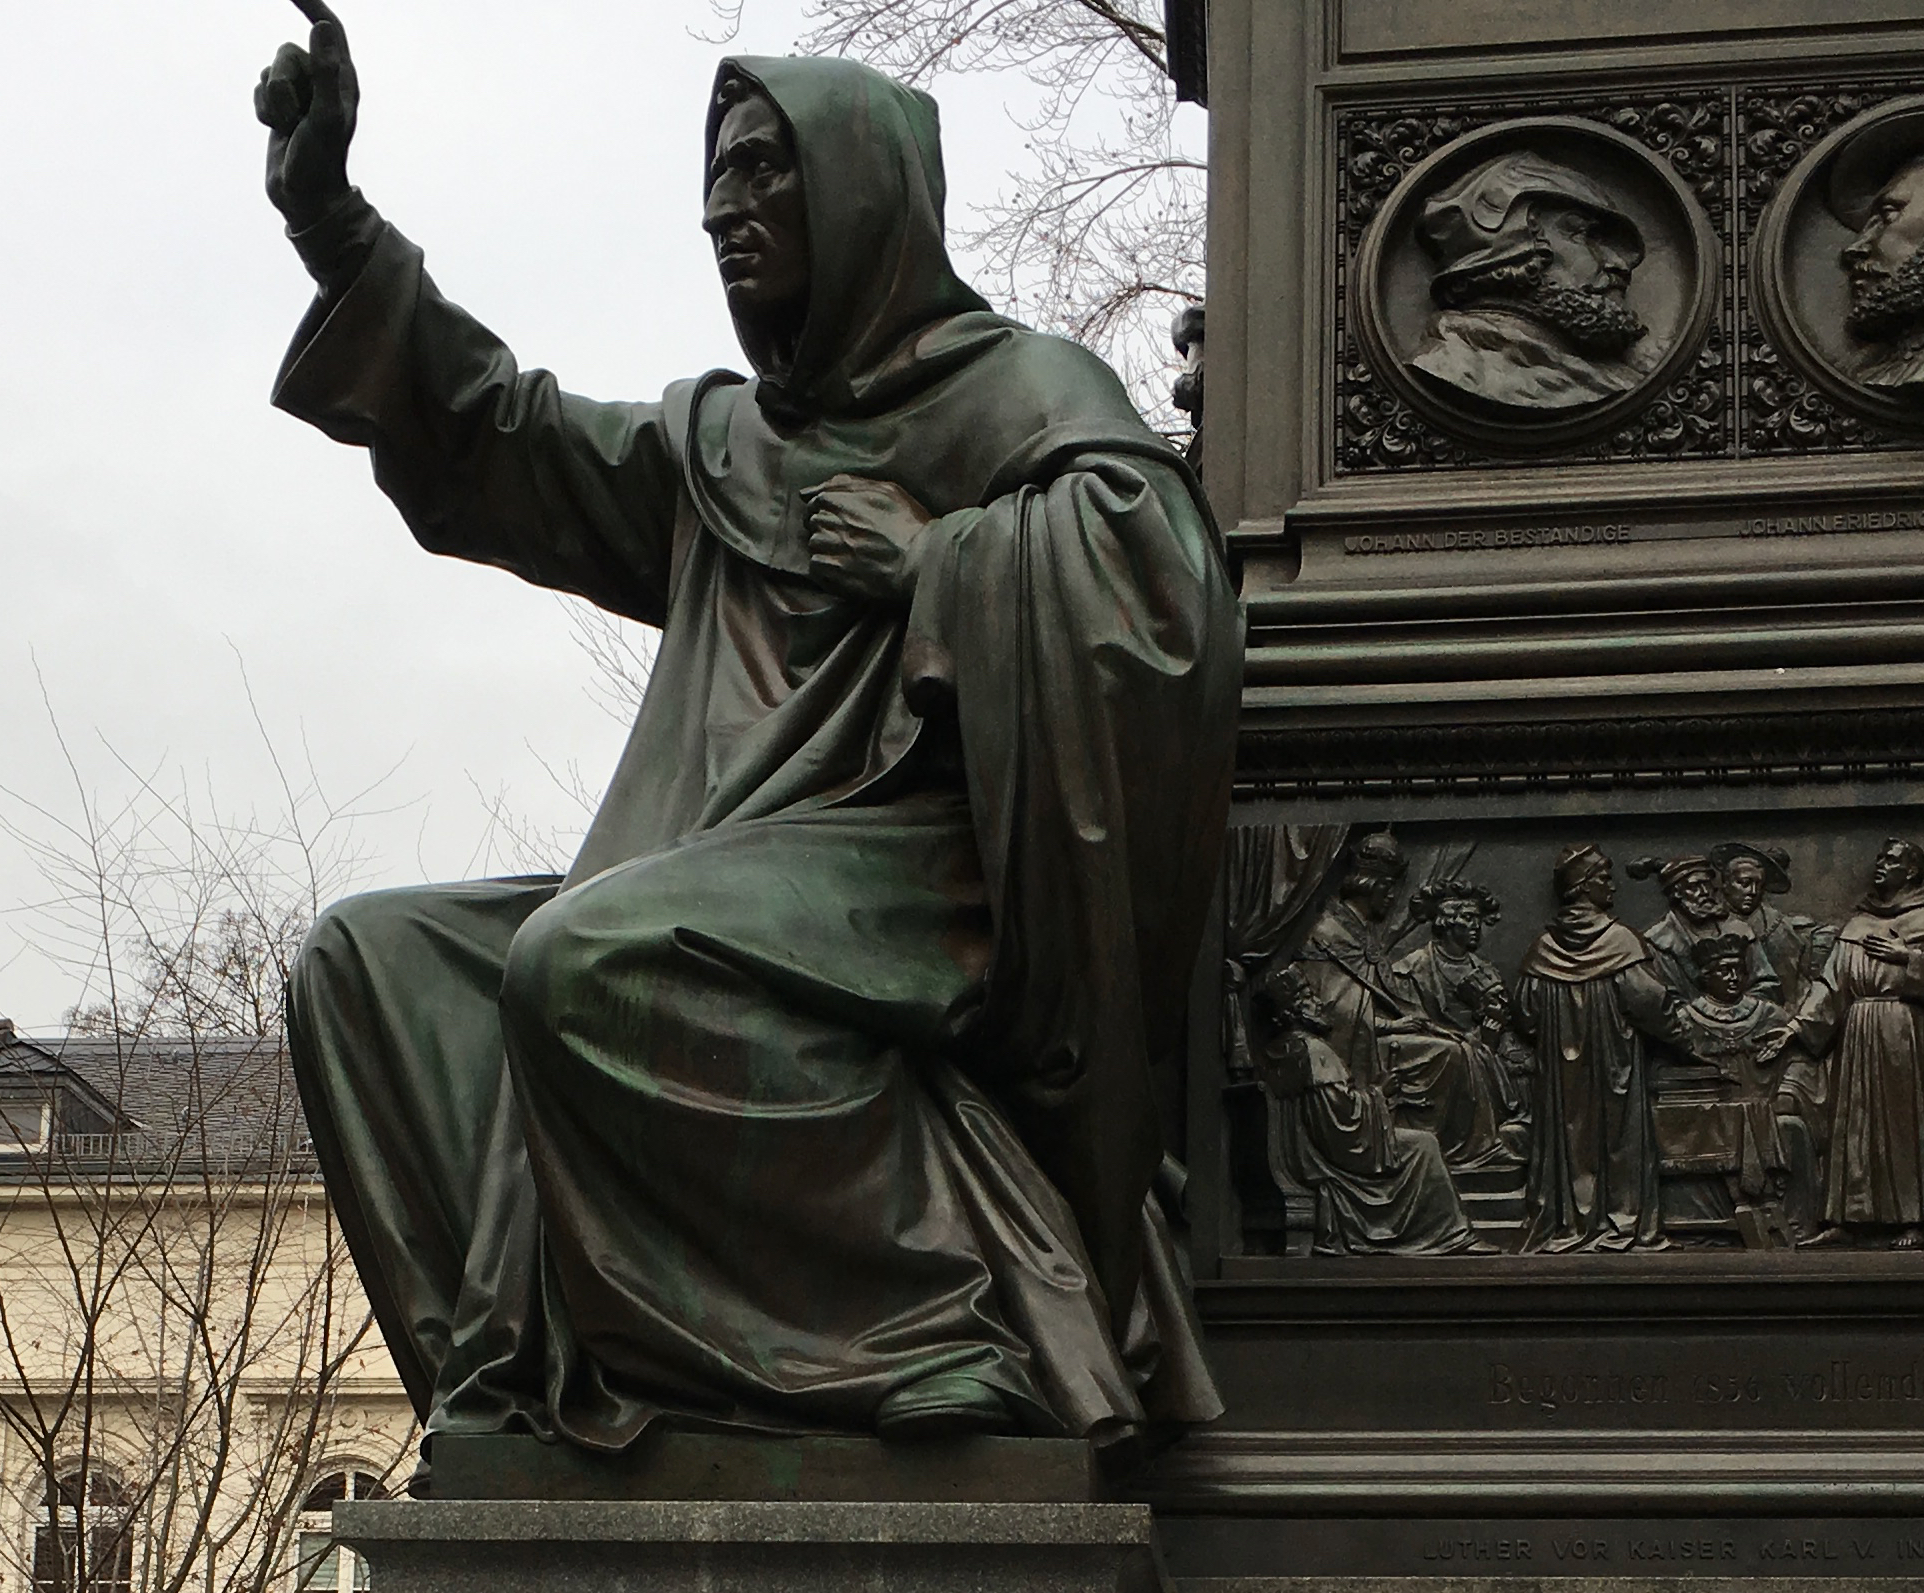 SavonarolaLuther